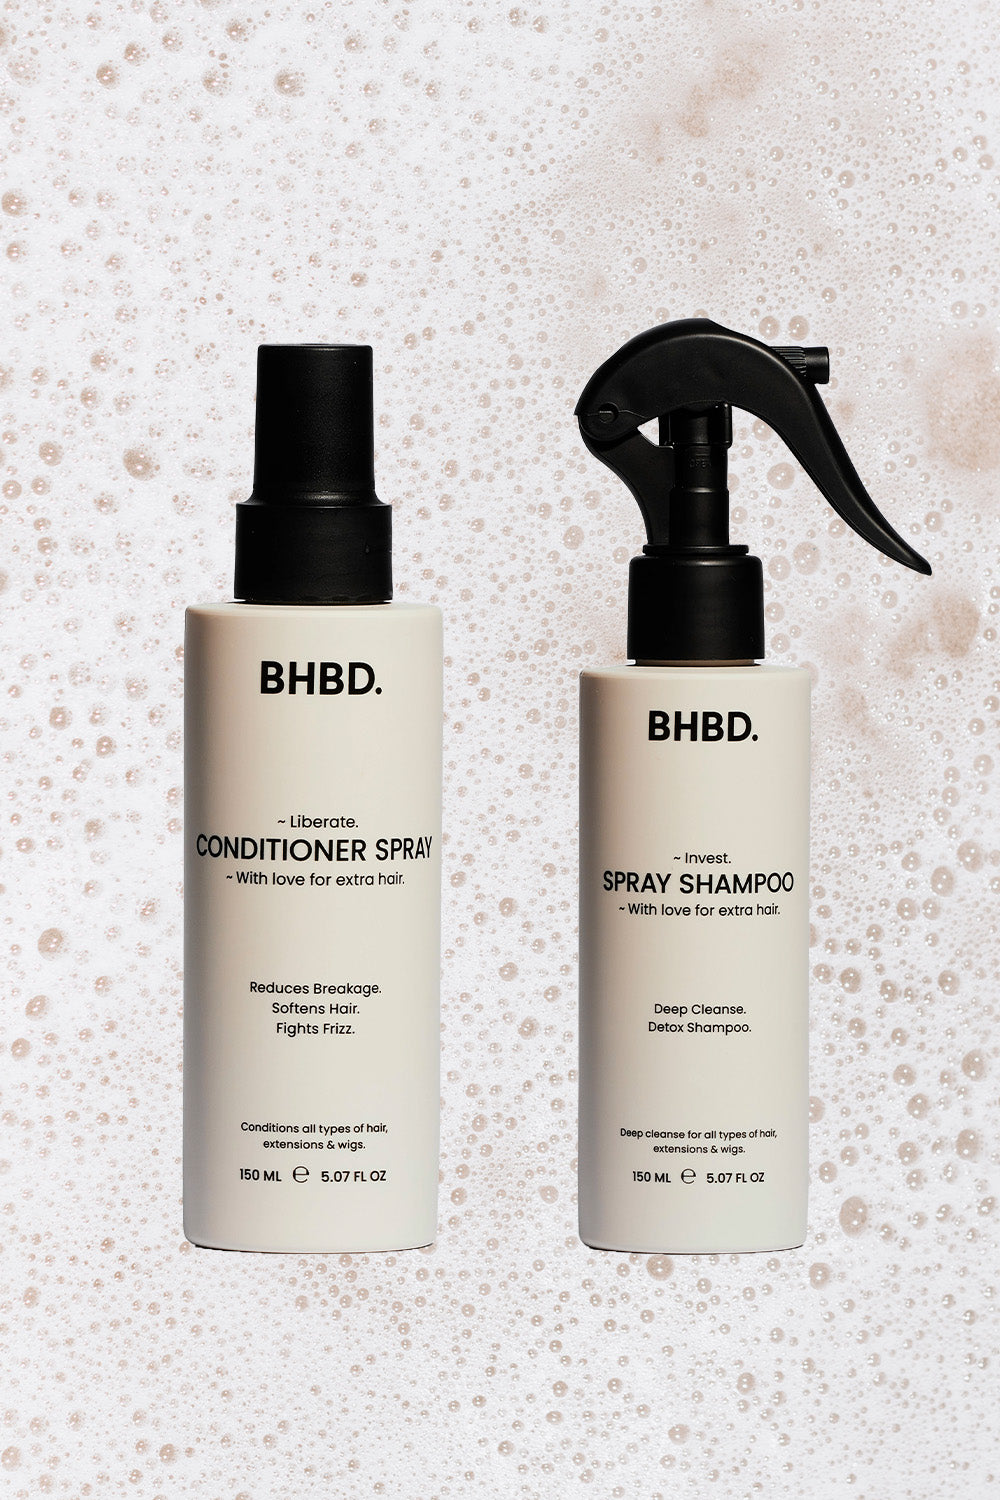 Conditioner spray and spray shampoo